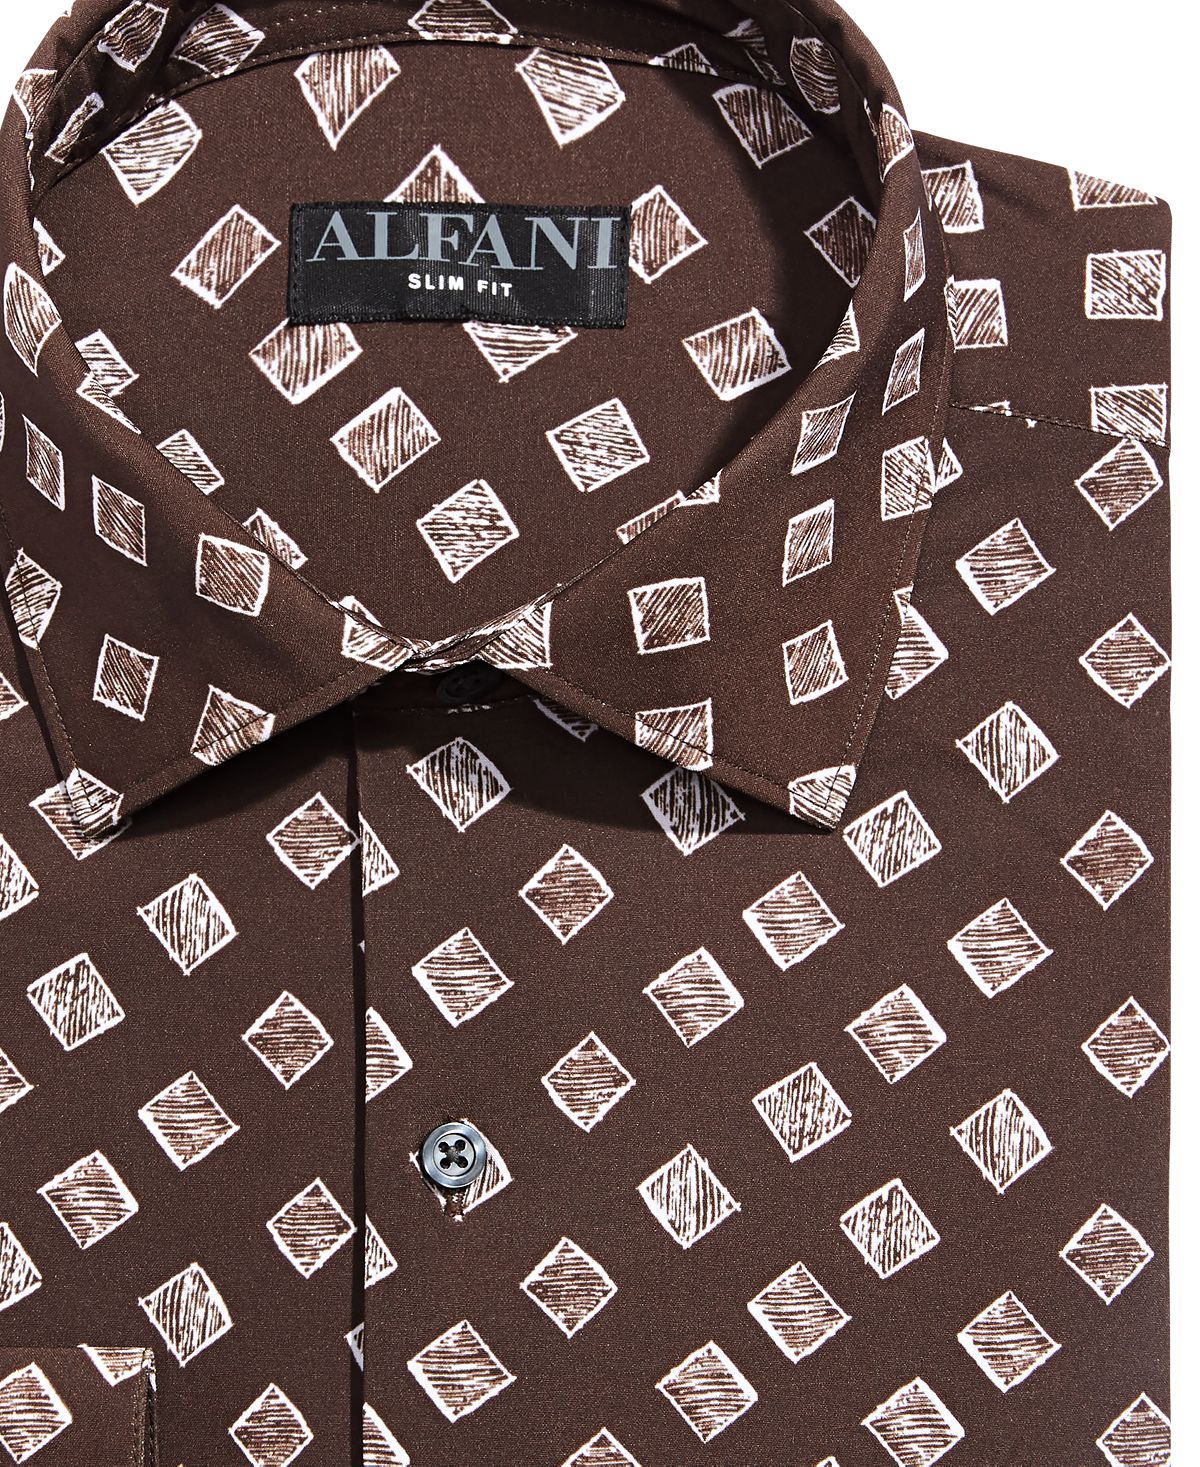 Alfani Slim Fit 4-way Stretch Dress Shirt Brown White